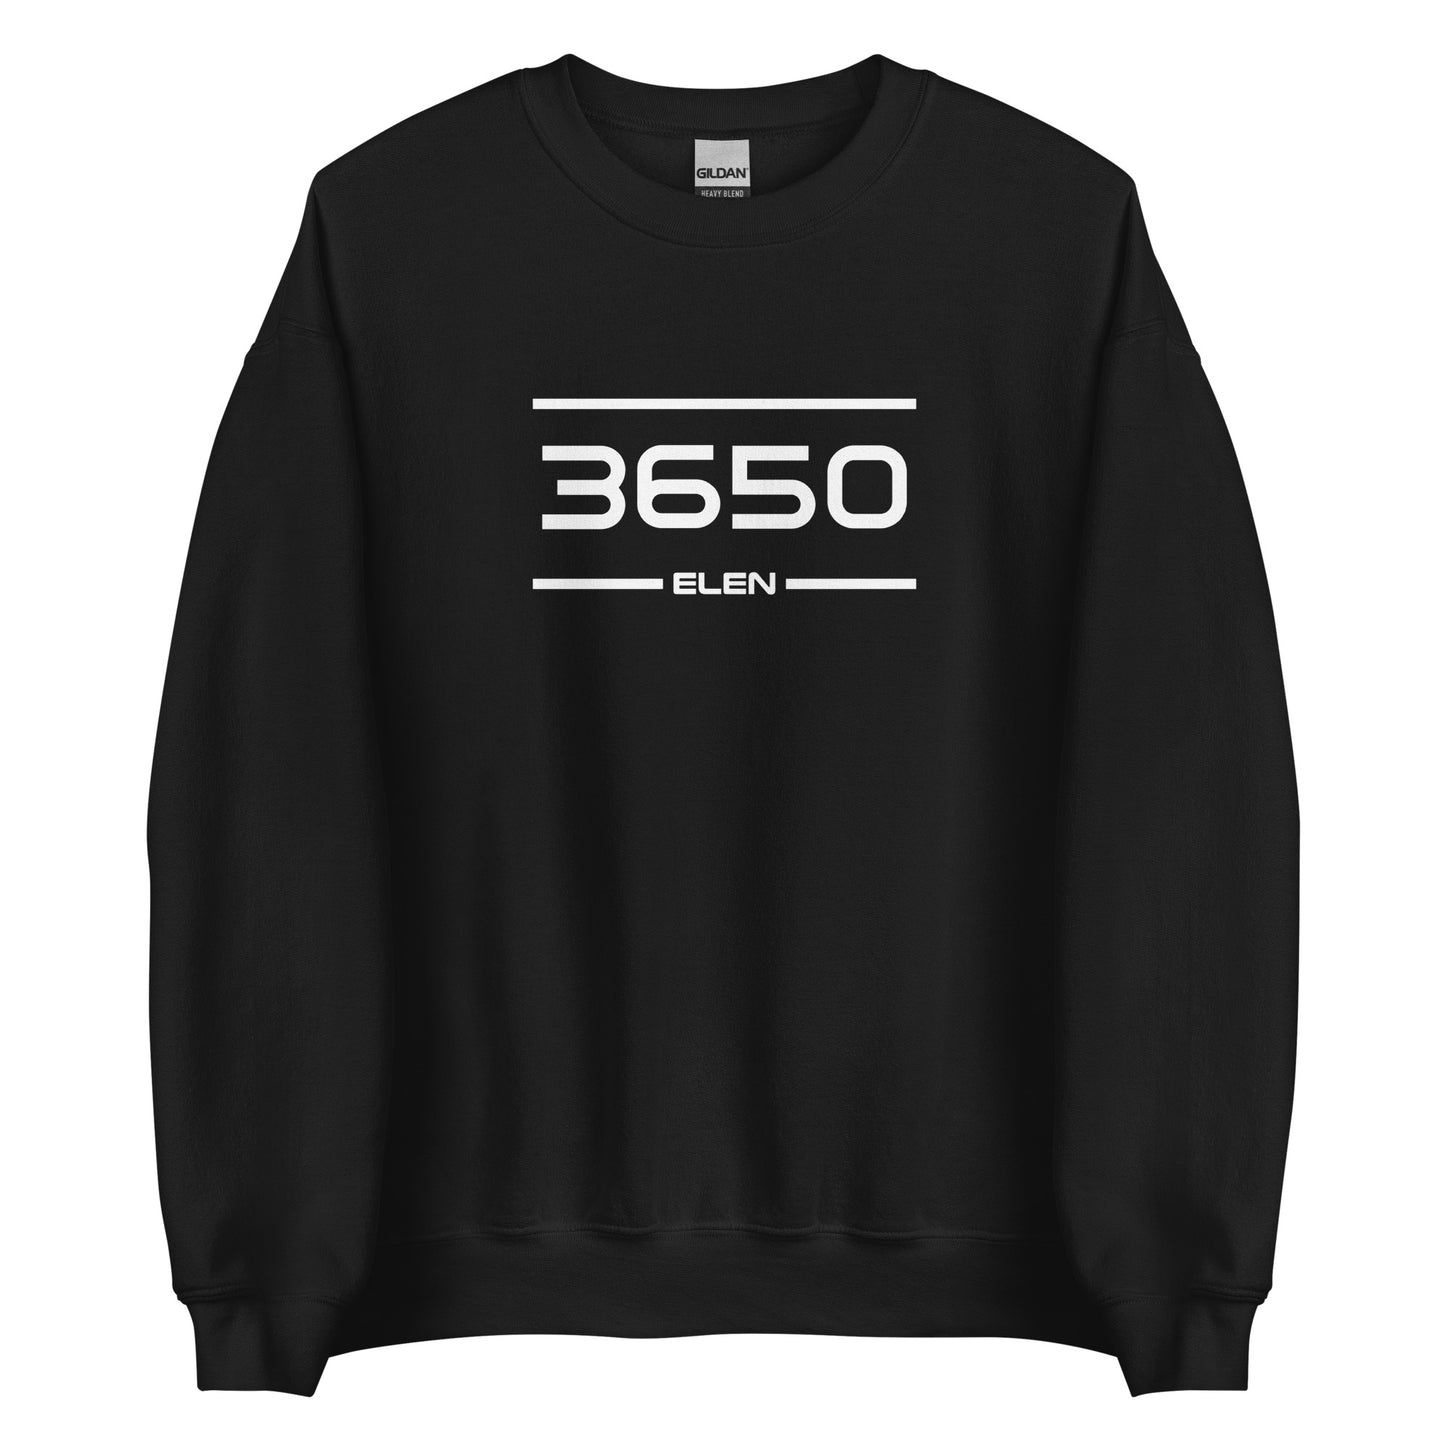 Sweater - 3650 - Elen (M/V)